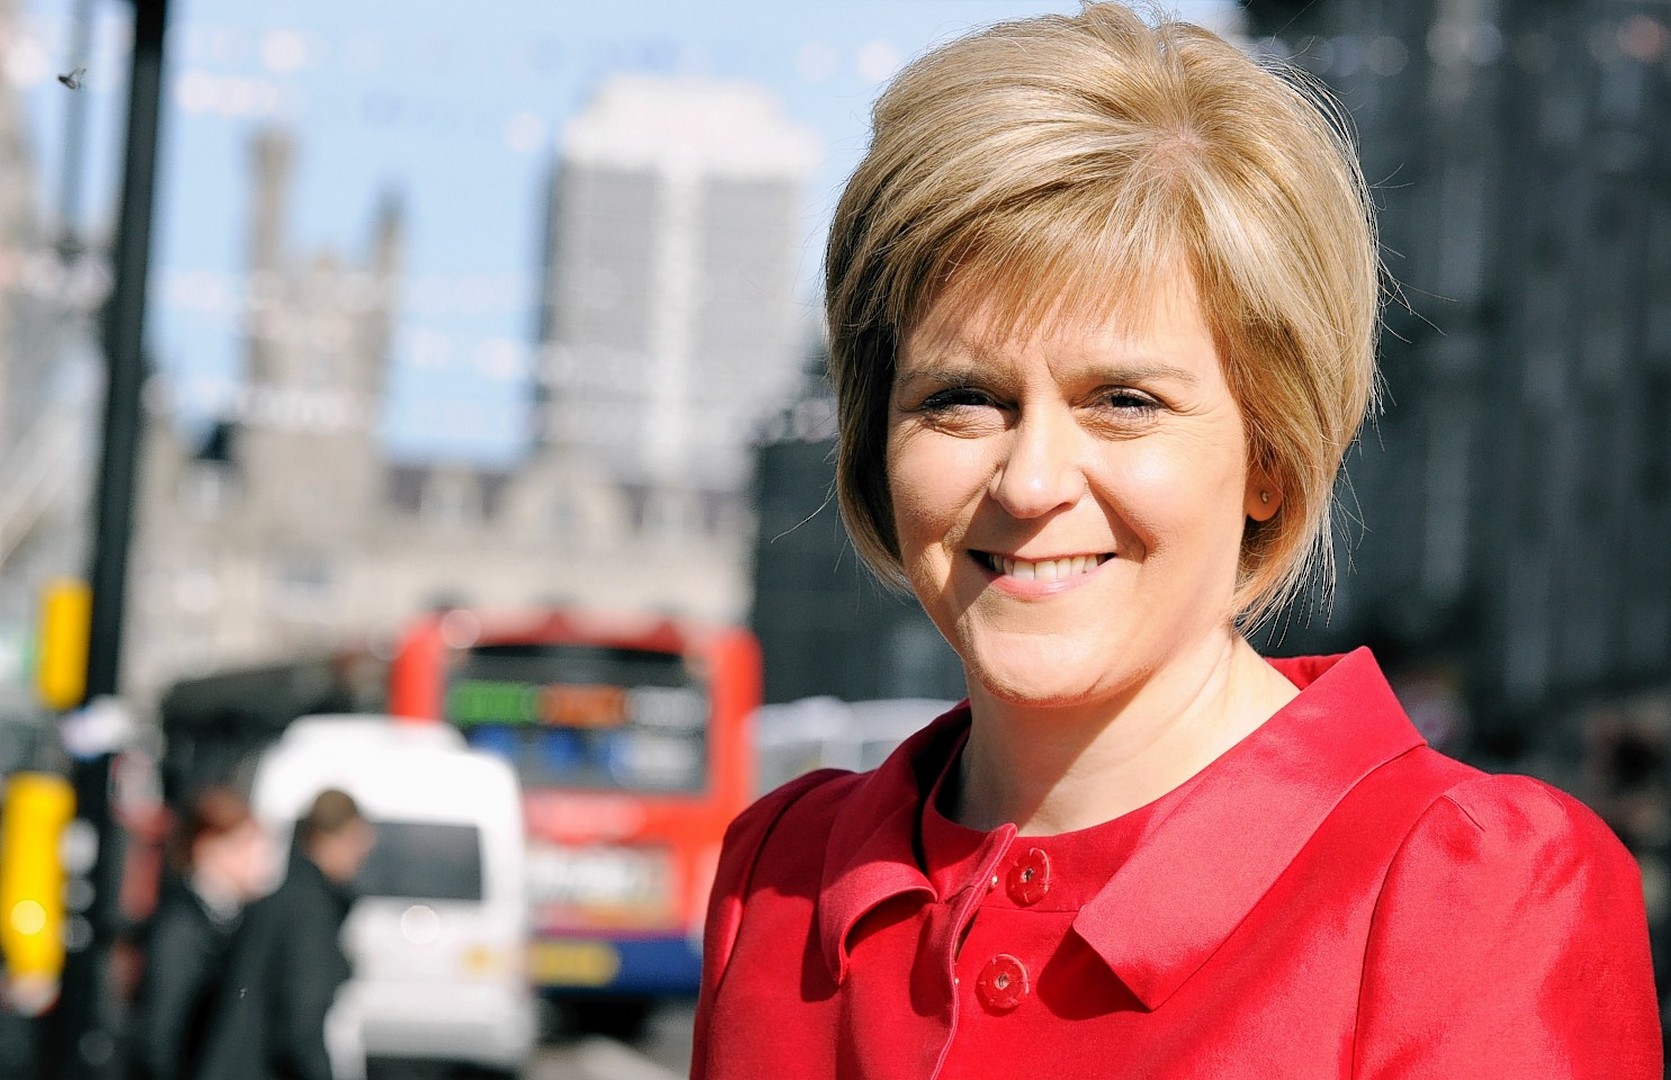 Nicola Ferguson Sturgeon. Γεννημένη στο Irvine την 19η Ιουλίου του 1970, αποτελεί την 5η «μικρή πρωθυπουργό» της Σκωτίας. Ανέλαβε τα ηνία του SNP μετά την ήττα στο δημοψήφισμα για την ανεξαρτησία της Σκωτίας, το 2014. «Ήμουν σίγουρη ότι θα κερδίσουμε», είπε σε συνέντευξή της το περασμένο Σάββατο στην Guardian. Η κυβέρνηση που σχημάτισε την 21η Νοεμβρίου φημίζεται για την αναλογία της 50/50 μεταξύ ανδρών και γυναικών.